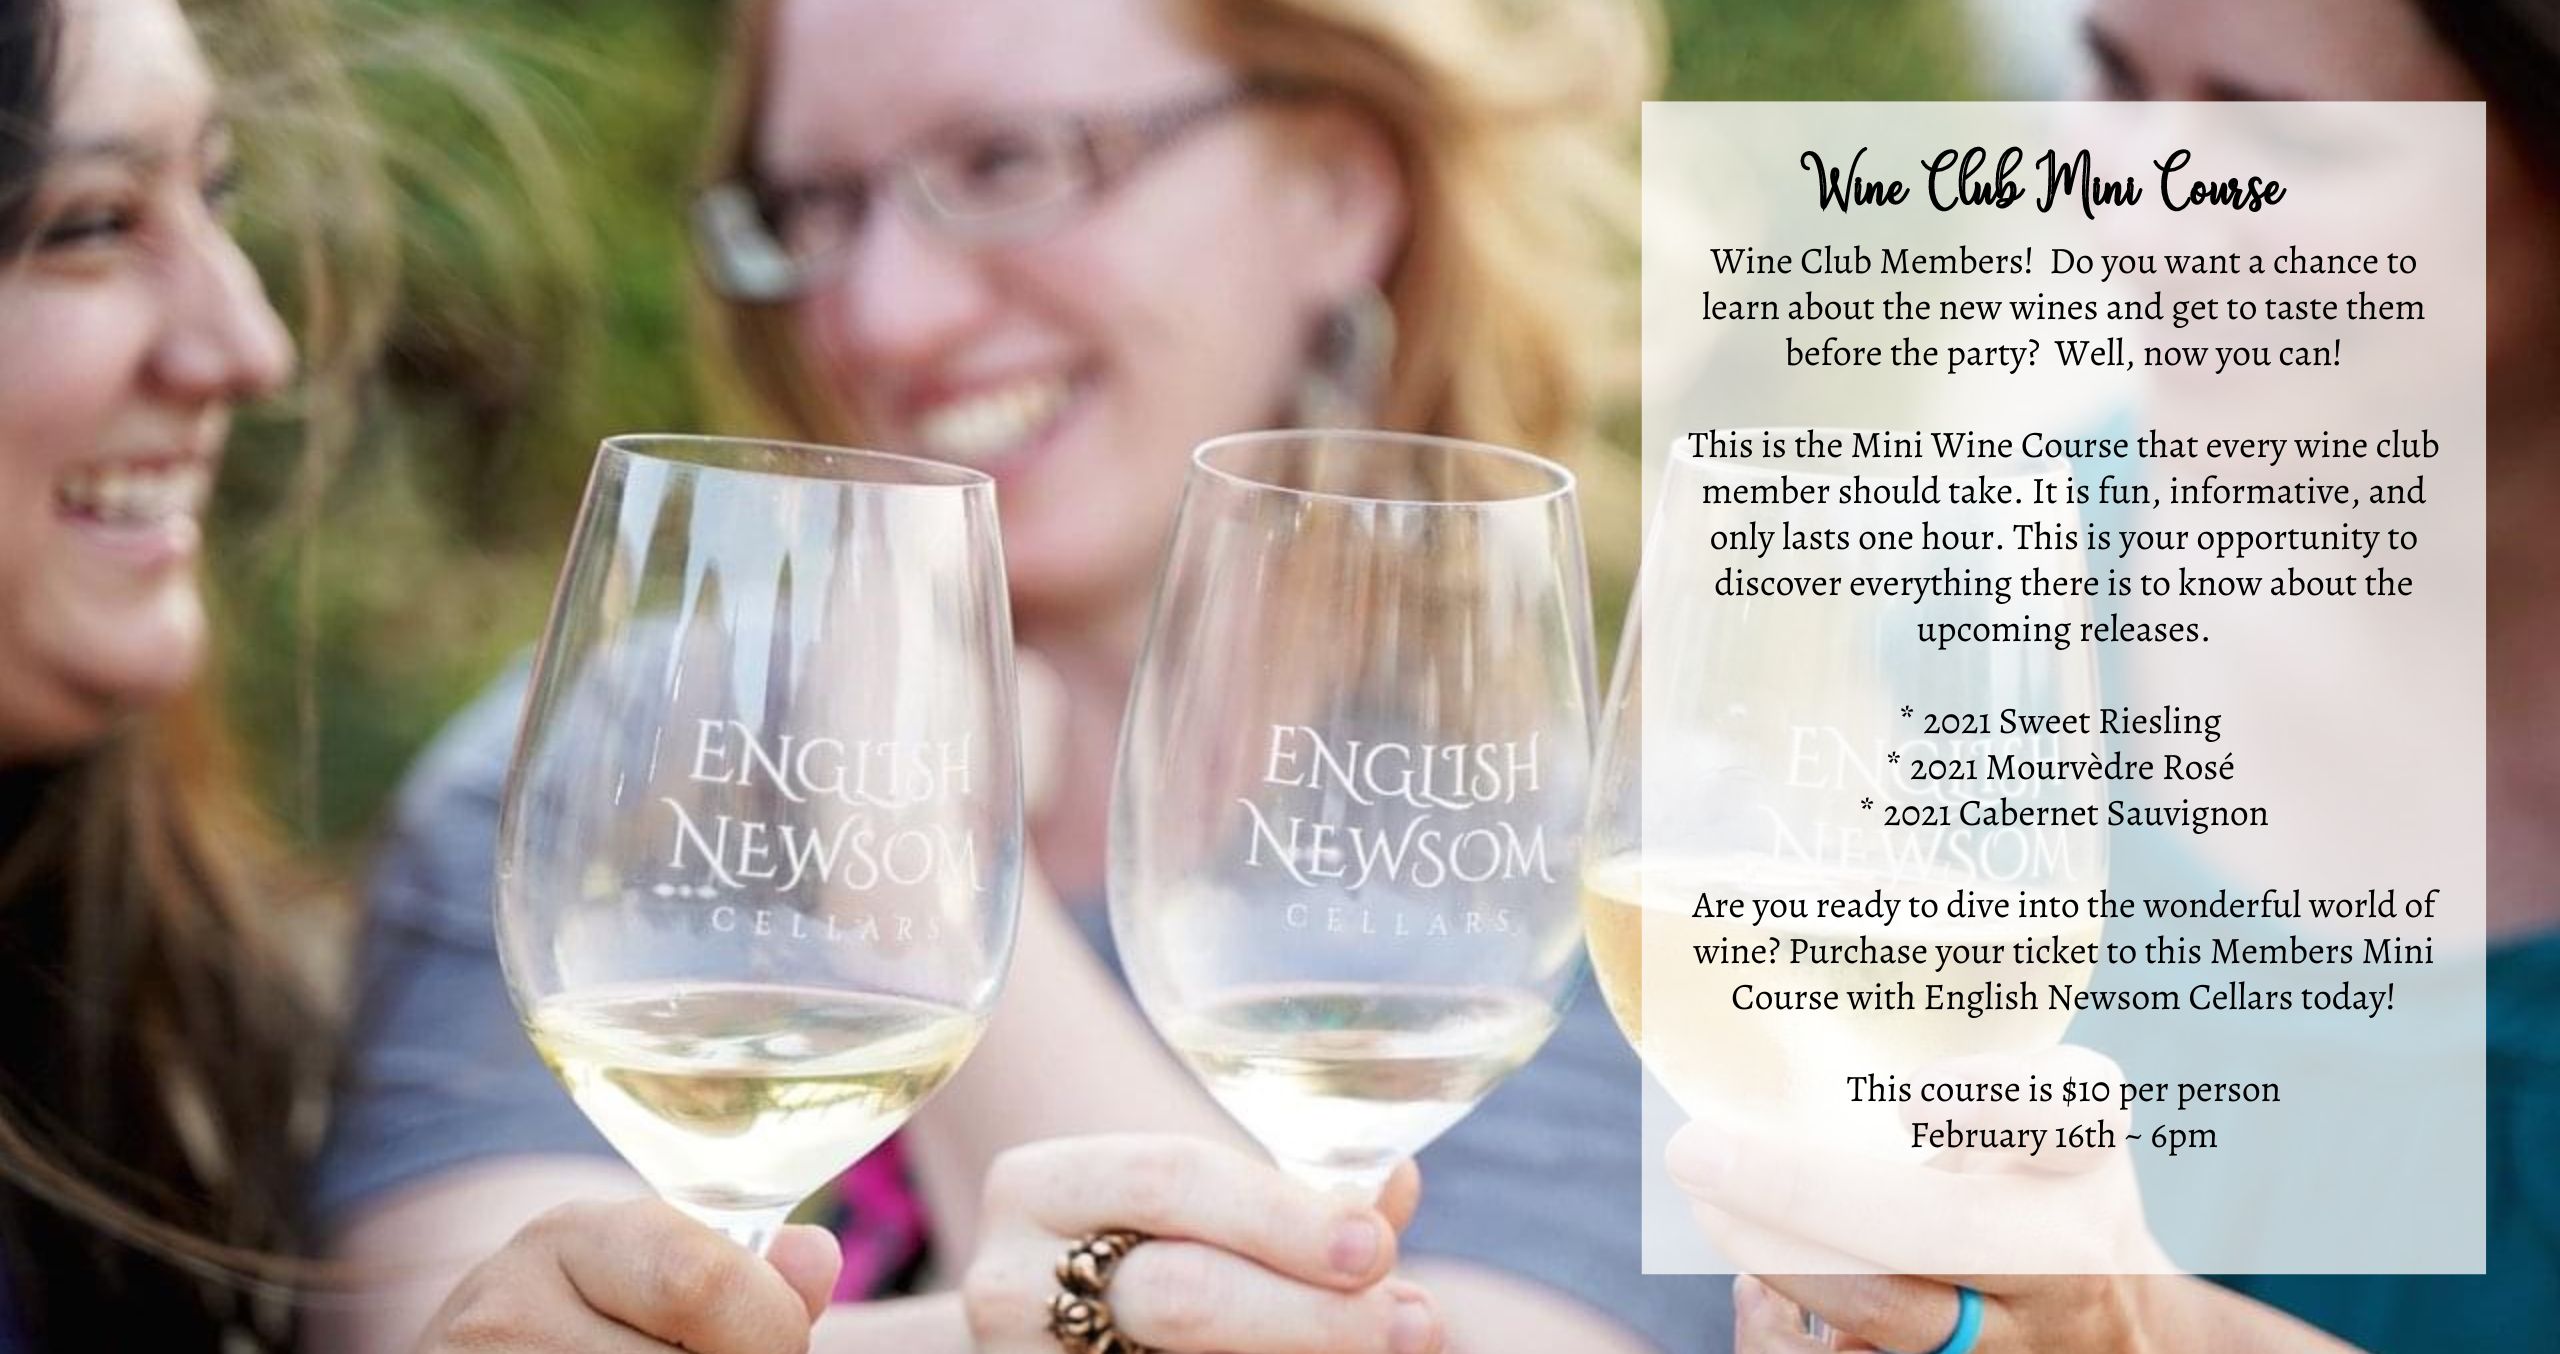 Wine Club Mini Course Details